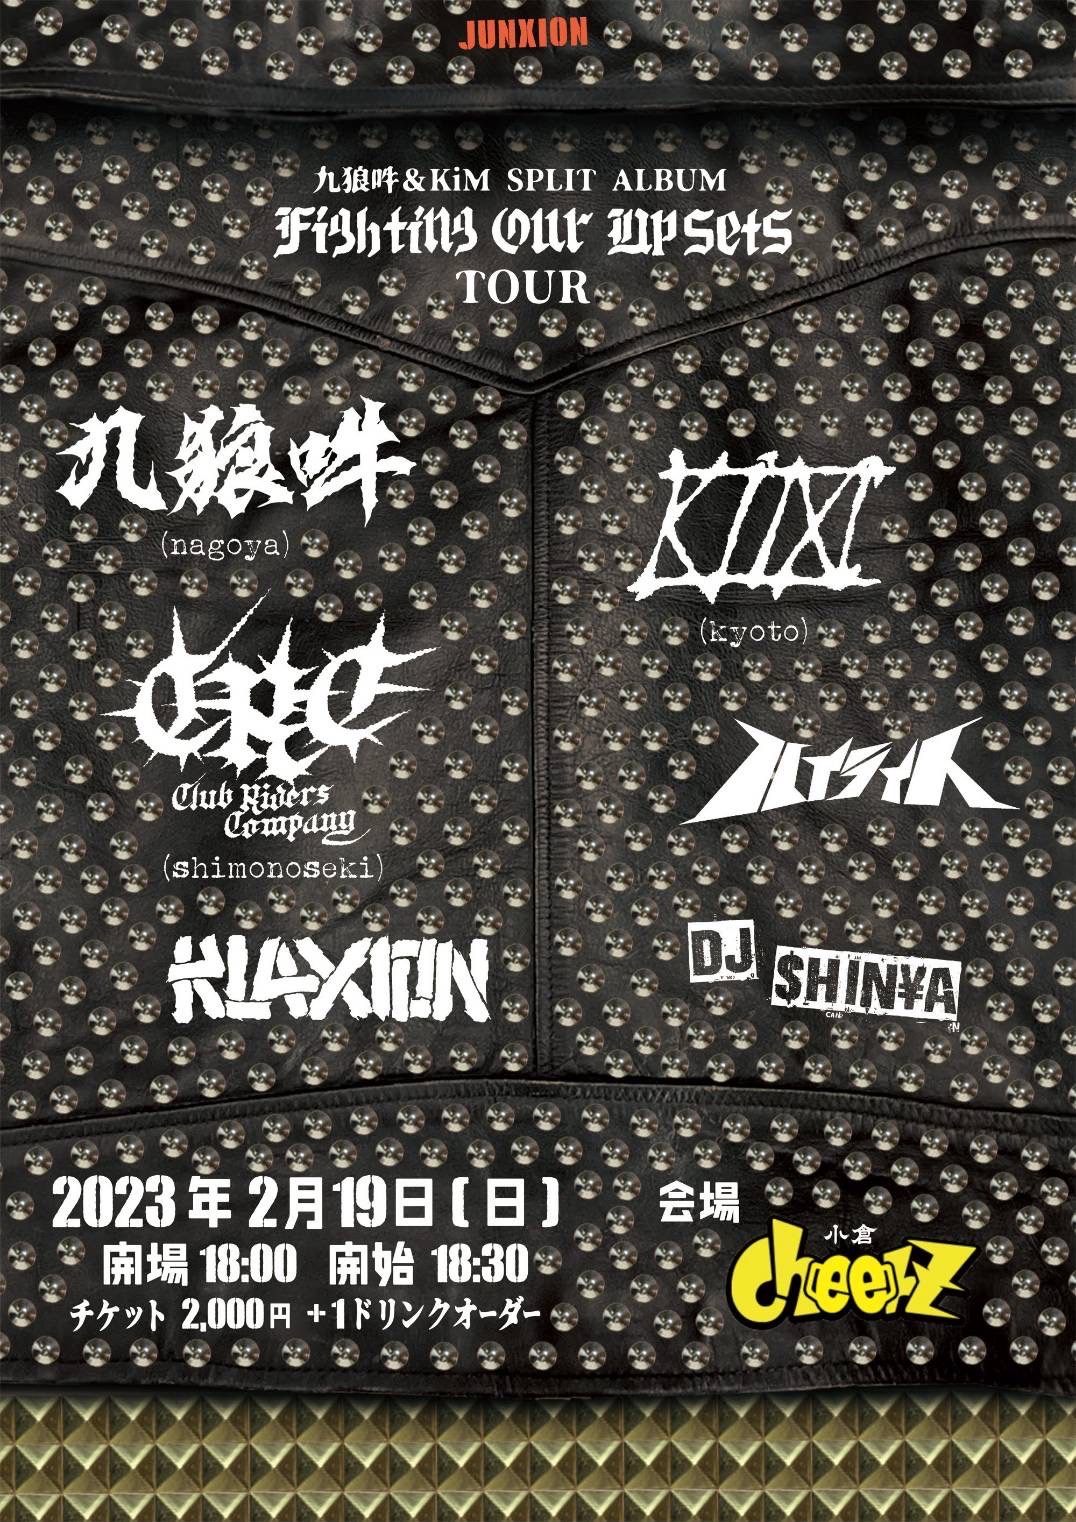 JUNXION 九狼吽&KiM SPLIT ALBUM ‘ FIGHTING OUR UPSETS ‘ TOUR